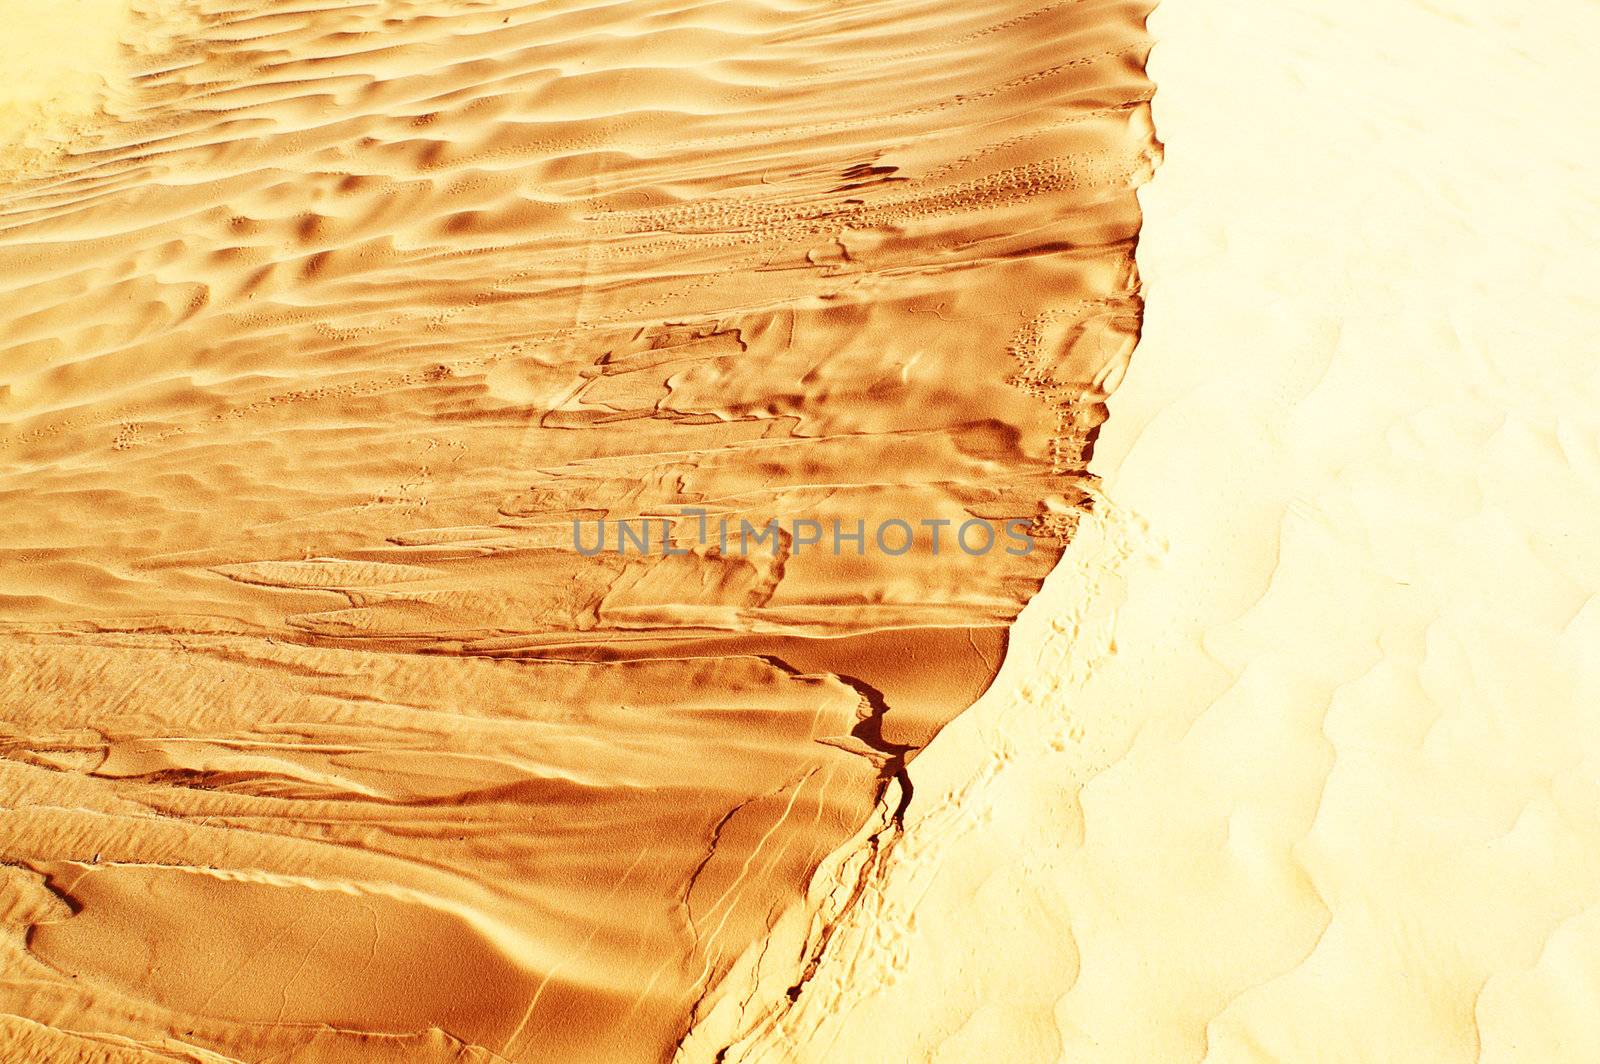 Dune by photochecker